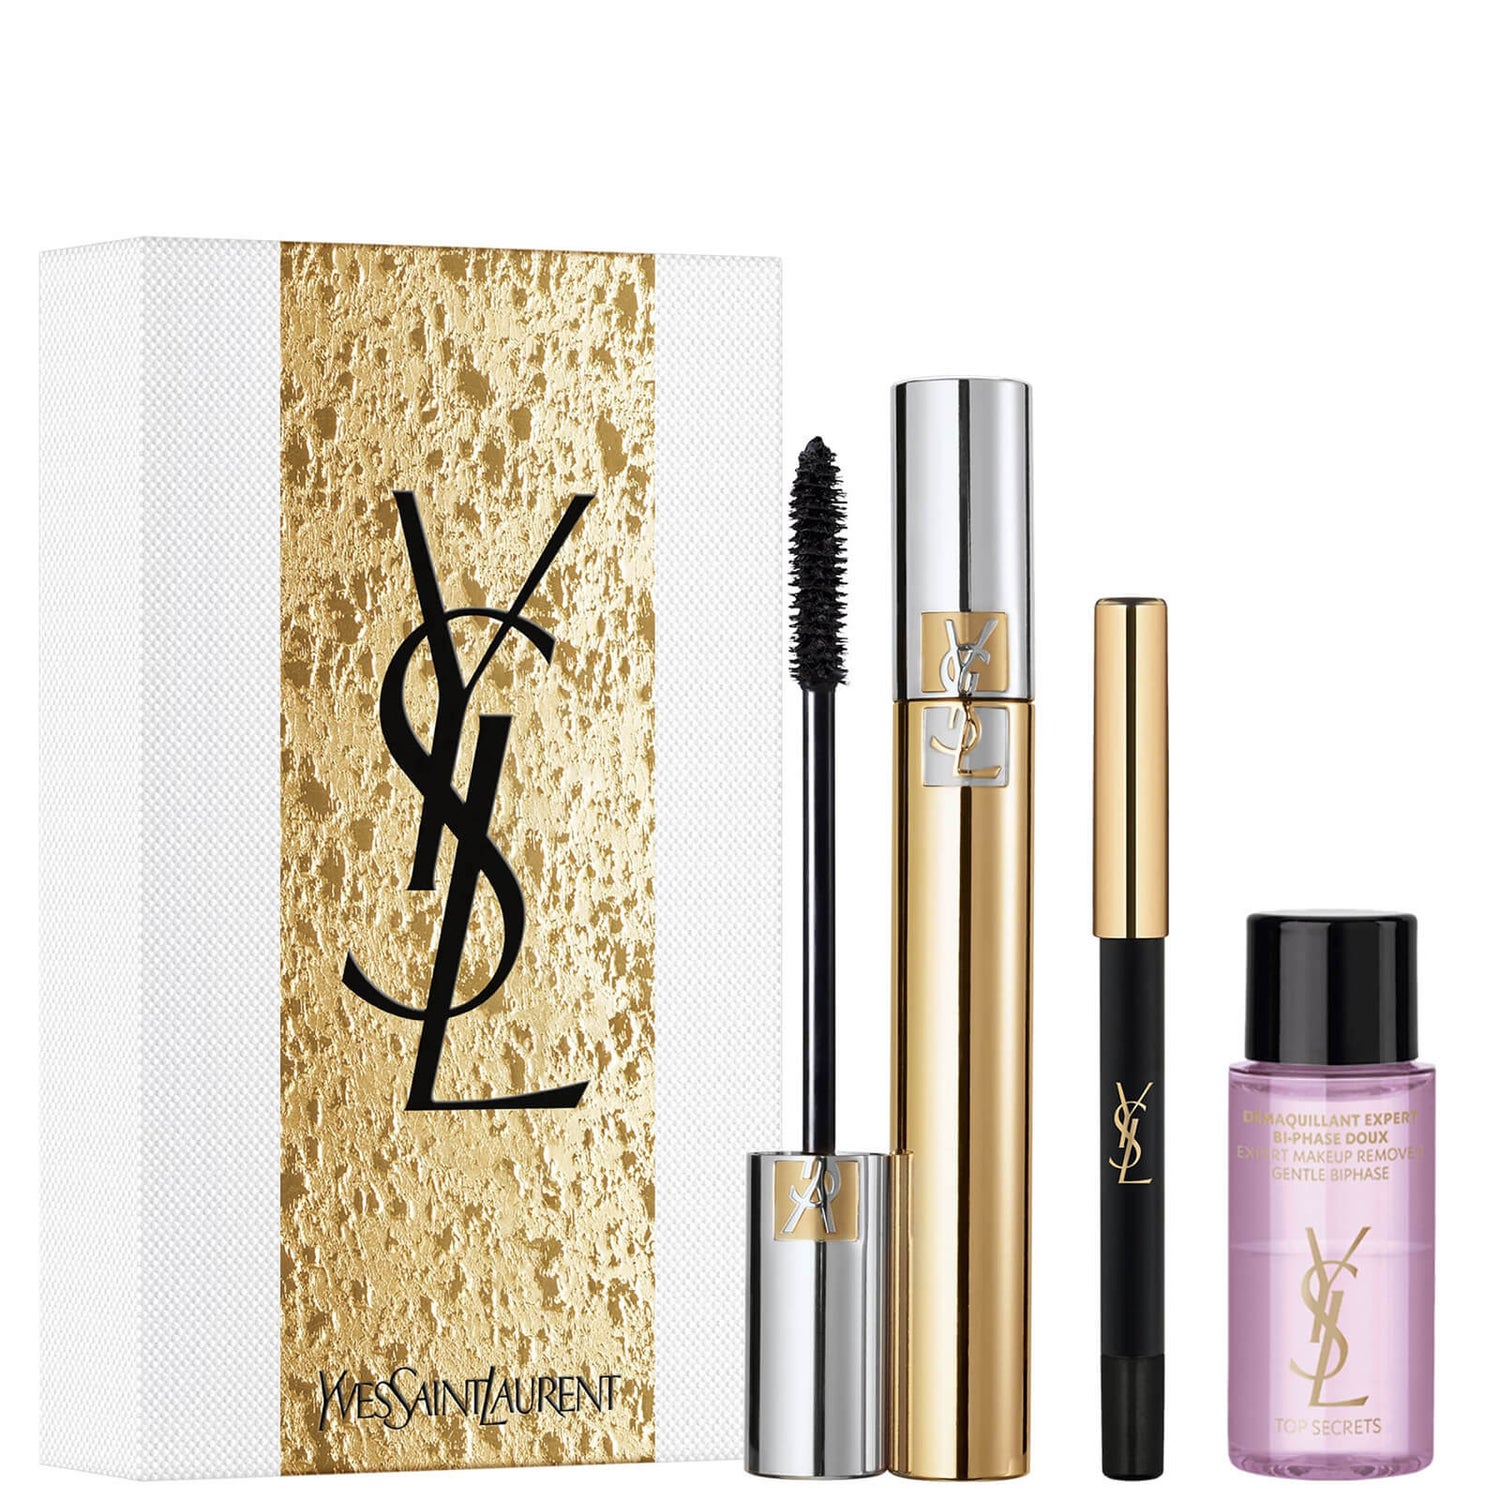 Yves Saint Laurent Mascara Volume Effet Faux Cils Complete Eye Gift Set (Worth £45.00)